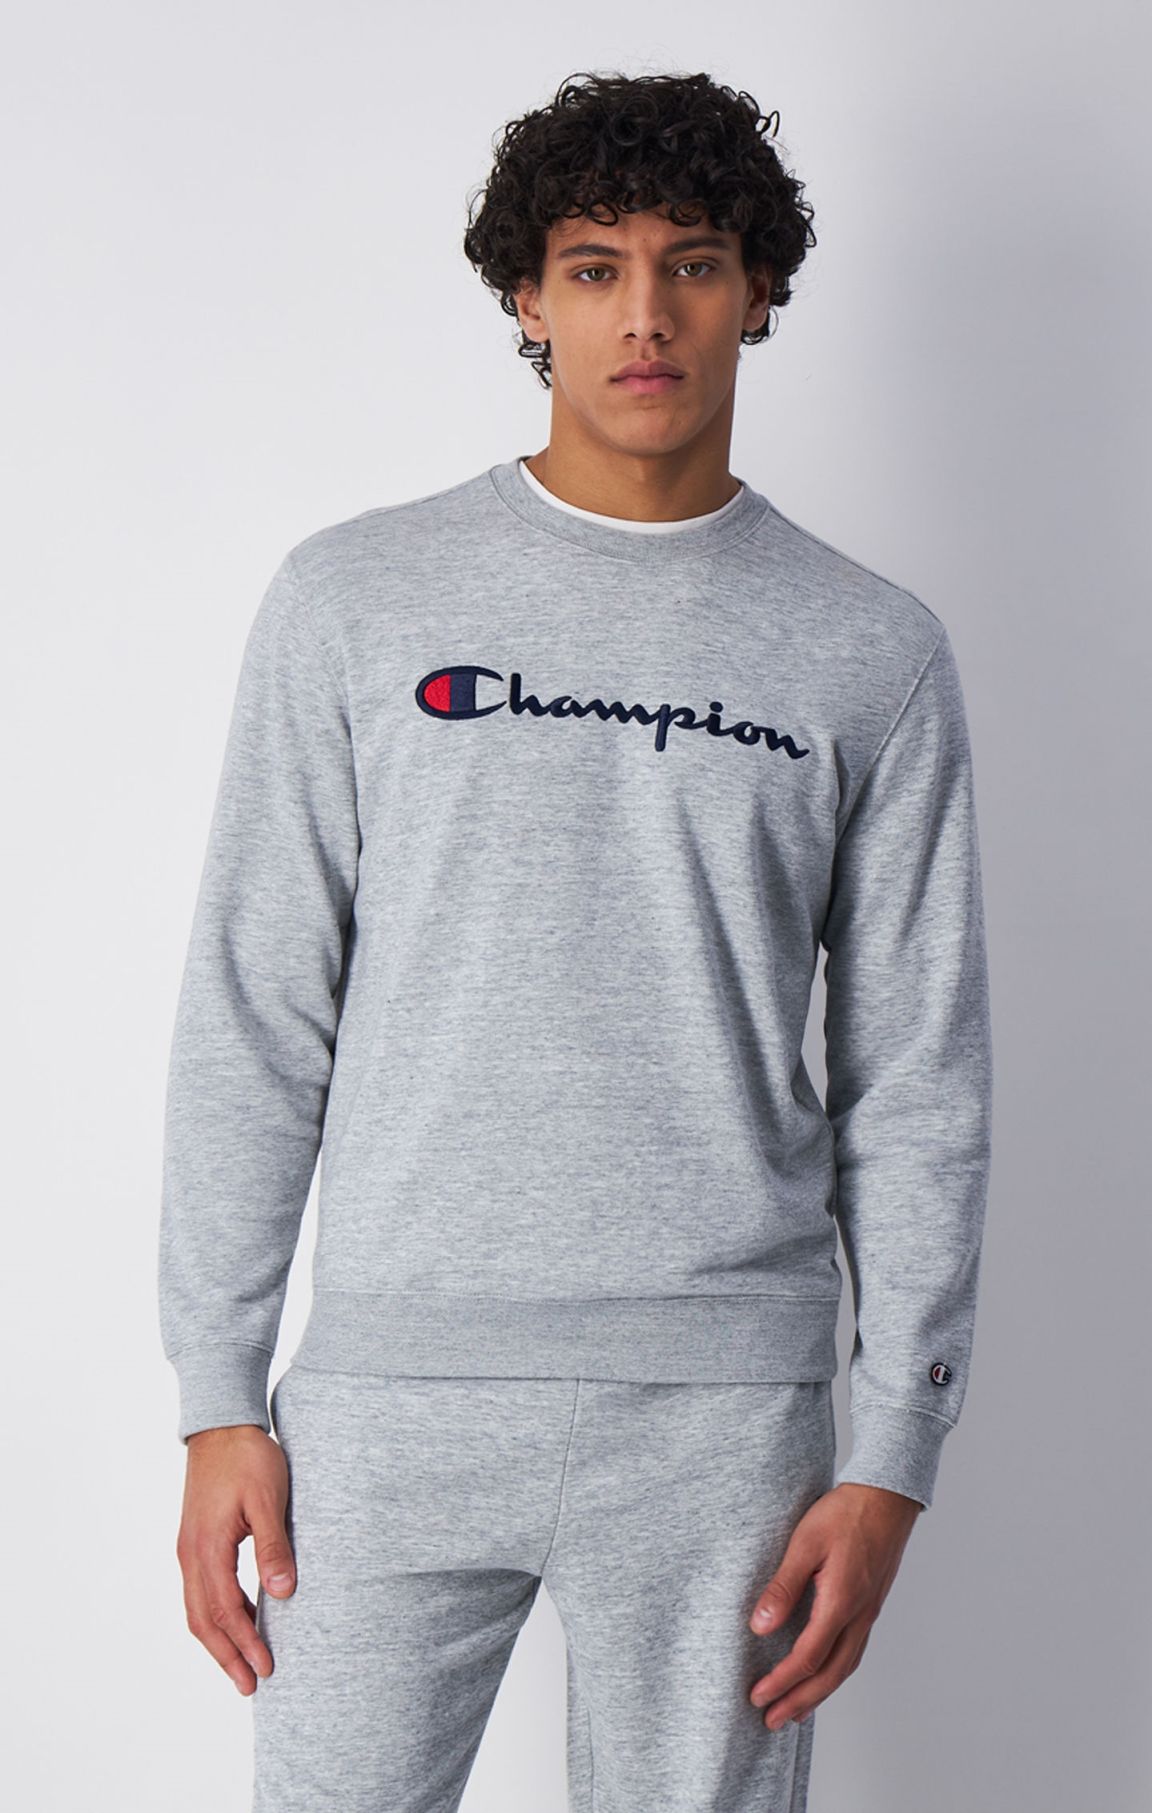 Sweatshirt à grand logo Champion brodé